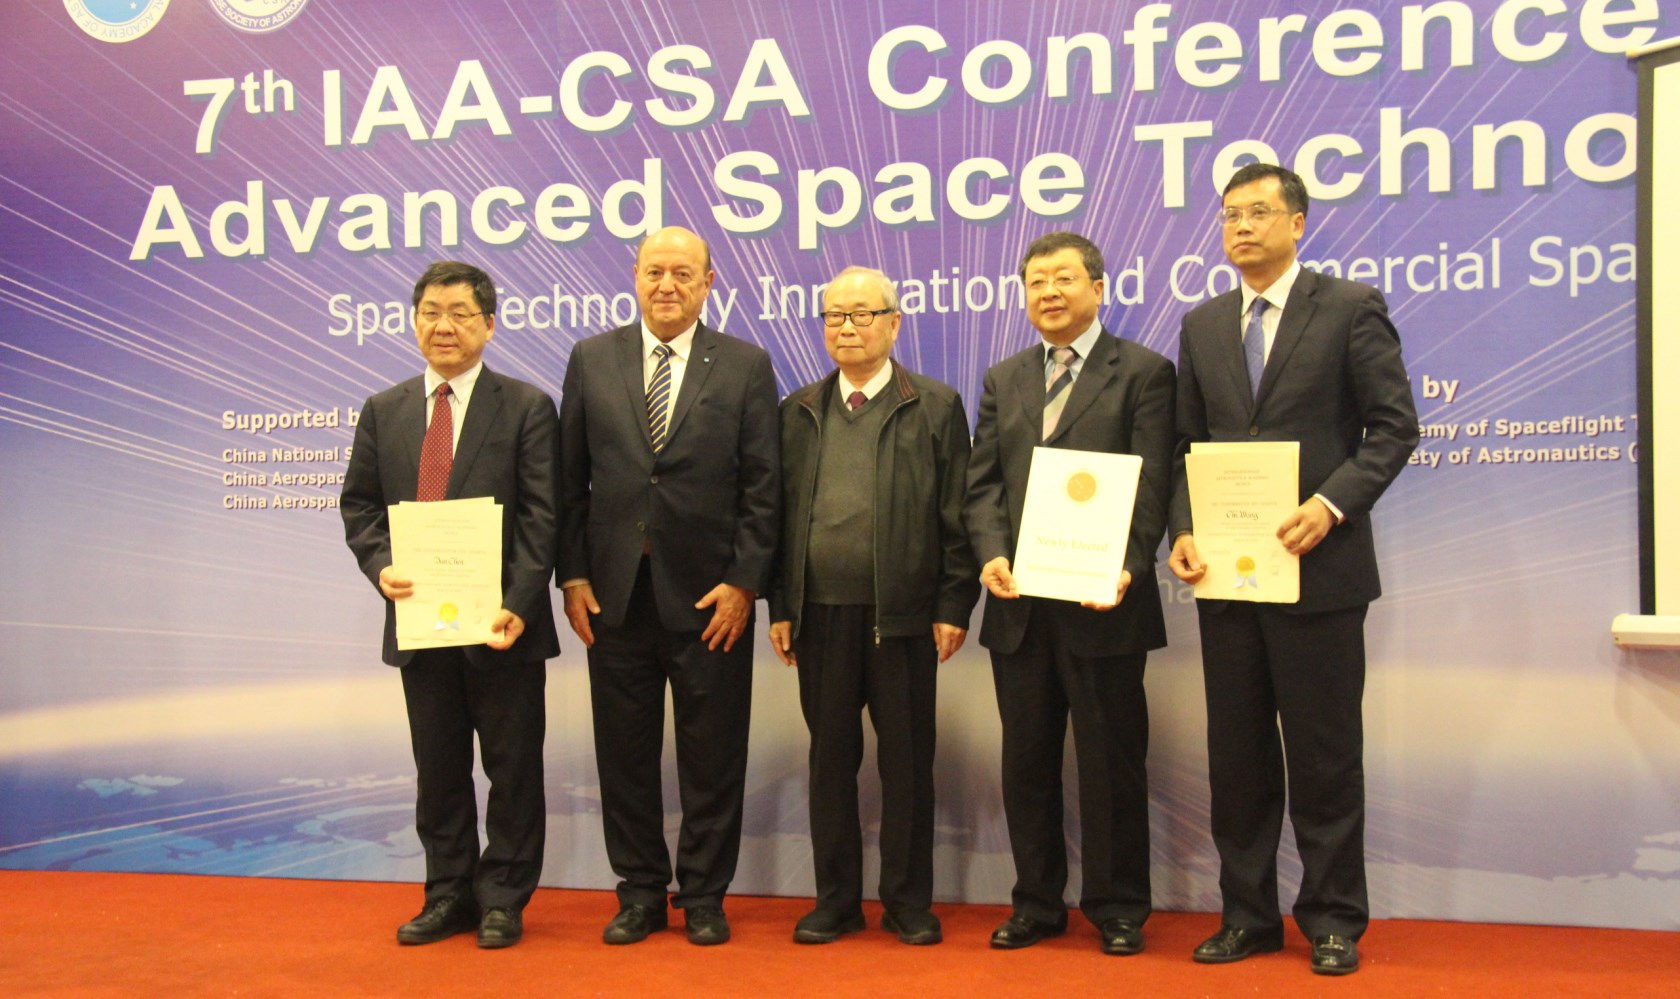 7th IAA-CSA Conference on Space Technology Innovation, November 23-24, 2017, Shanghai, China